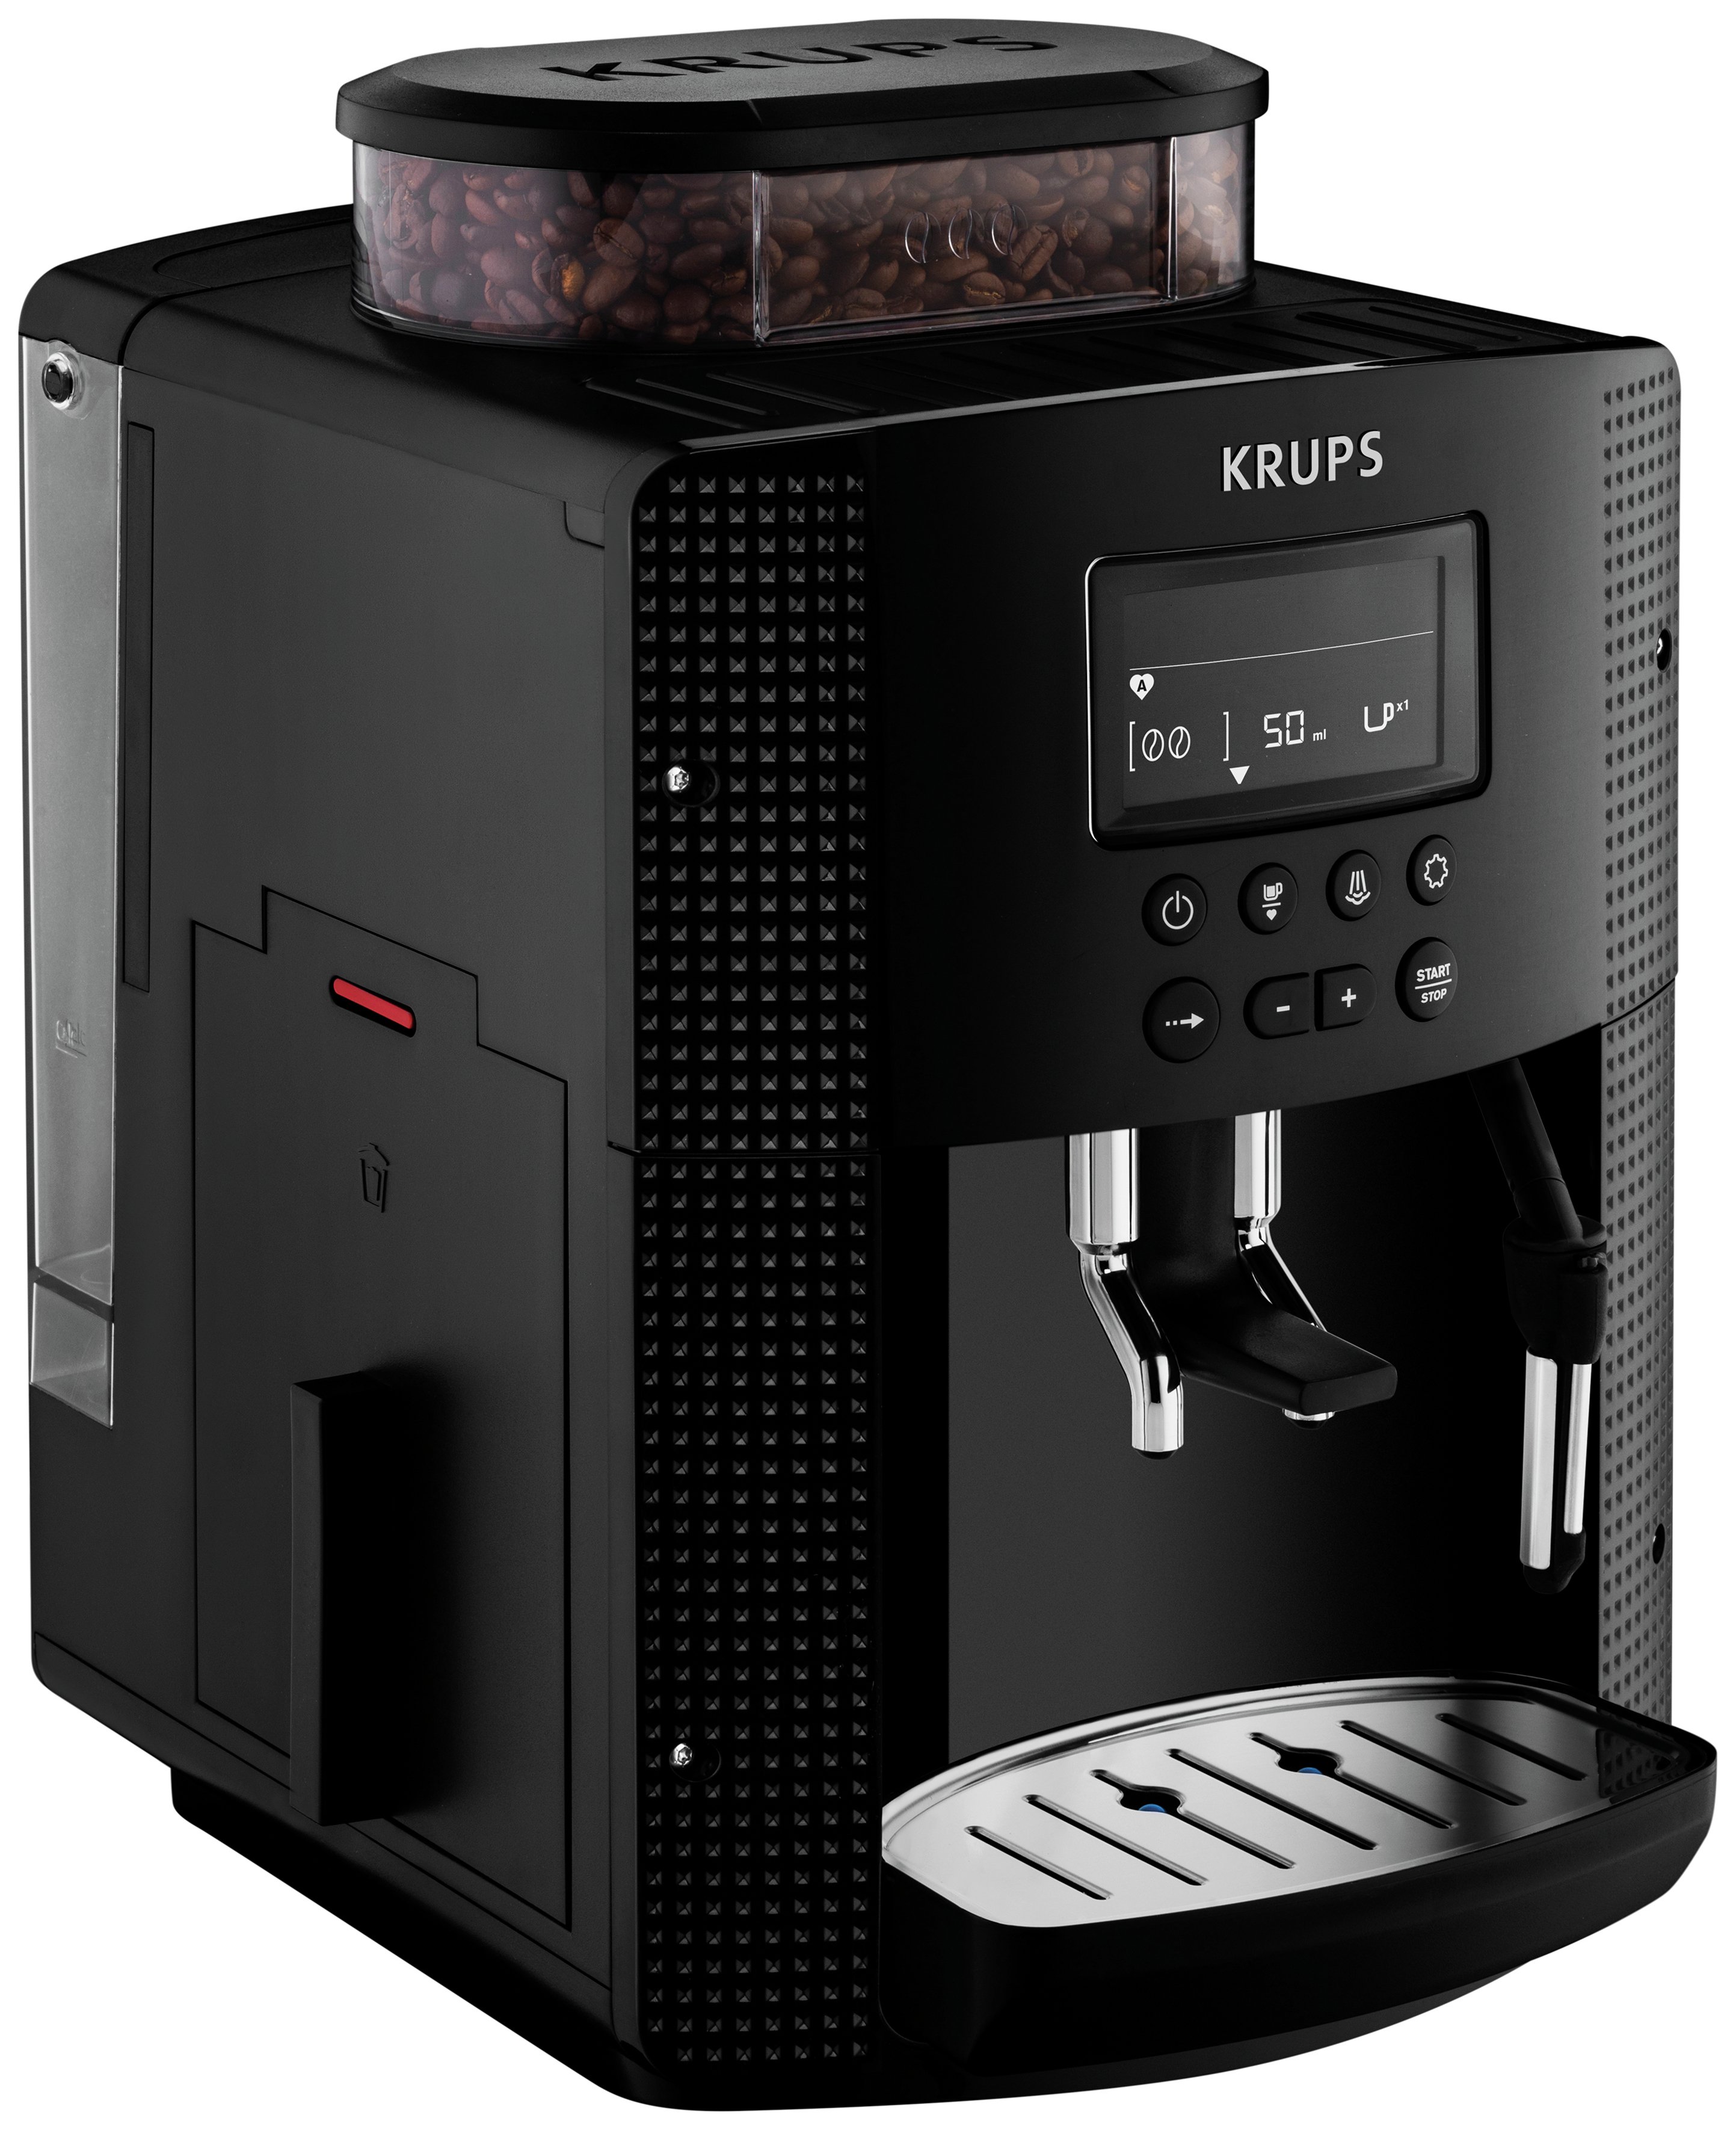 Krups Espresseria EA8150 Bean to Cup Coffee Machine